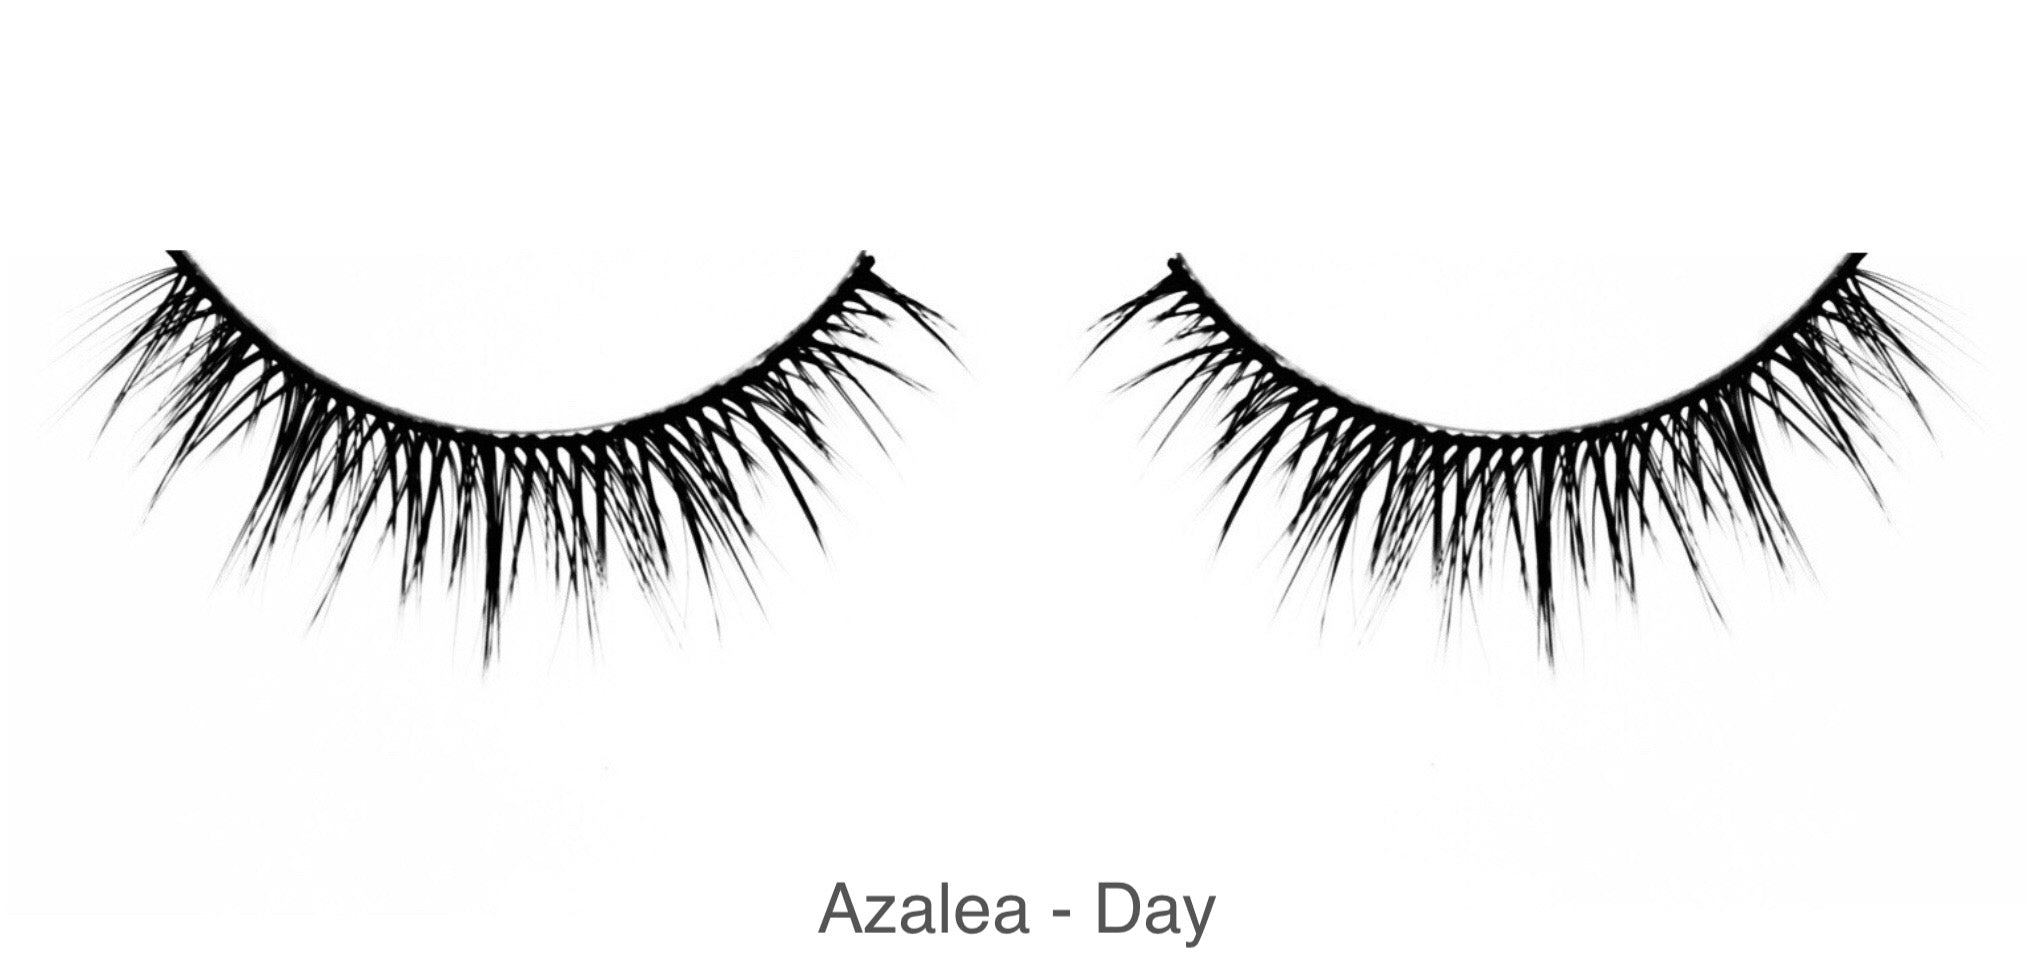 Azalea - Day